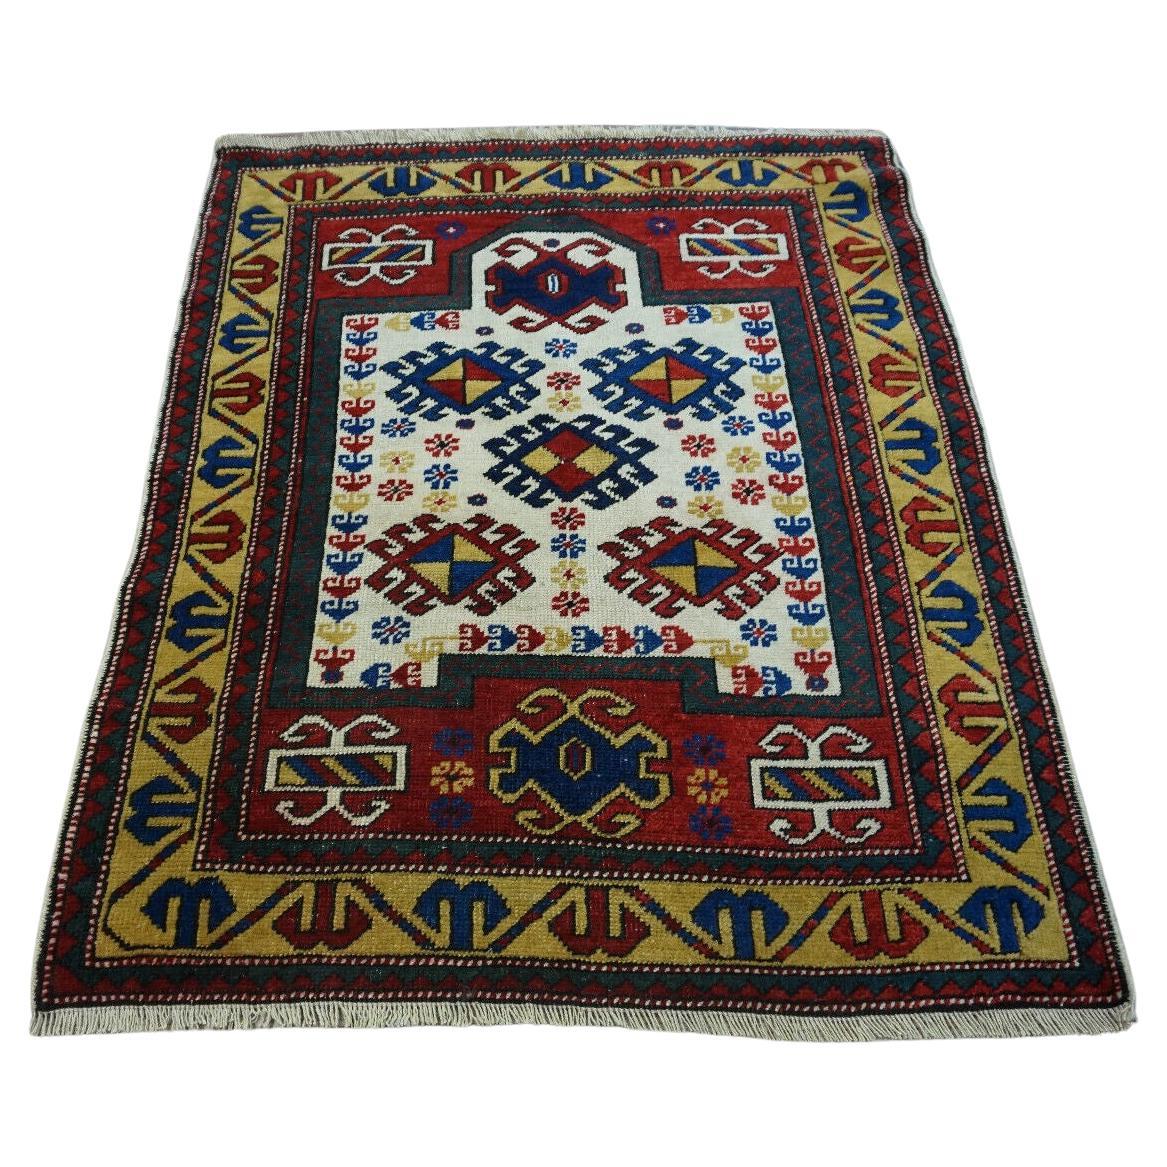 Handmade Antique Caucasian Kazak Prayer Rug 2.9' x 3.6', 1940s - 1D57 For Sale